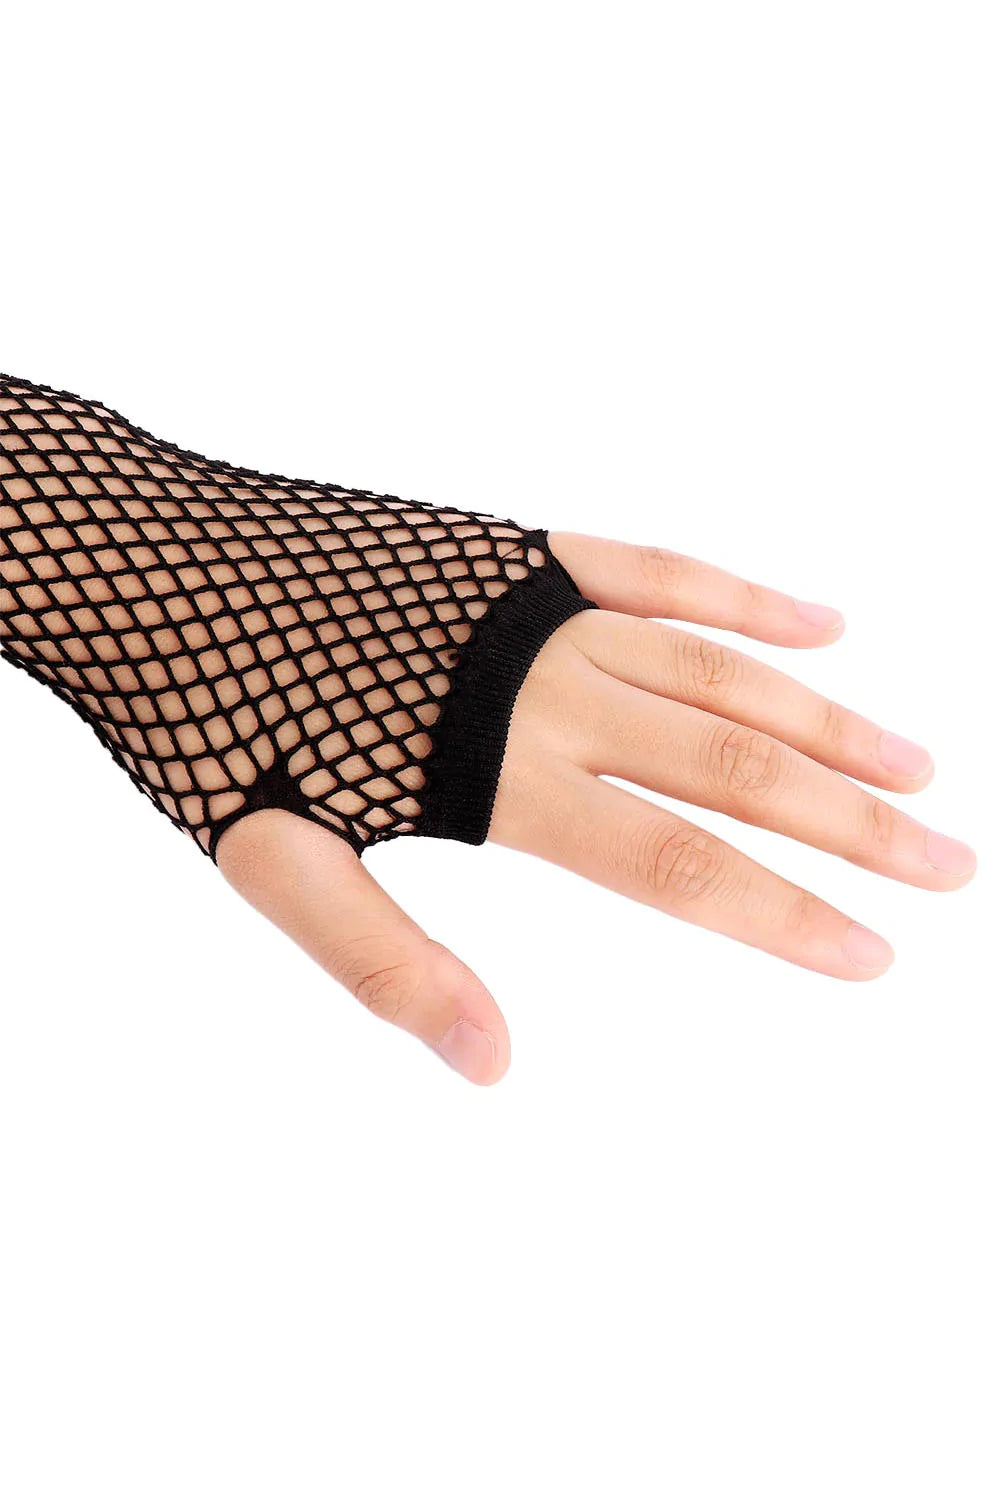 Mall Goth Fishnet Gloves